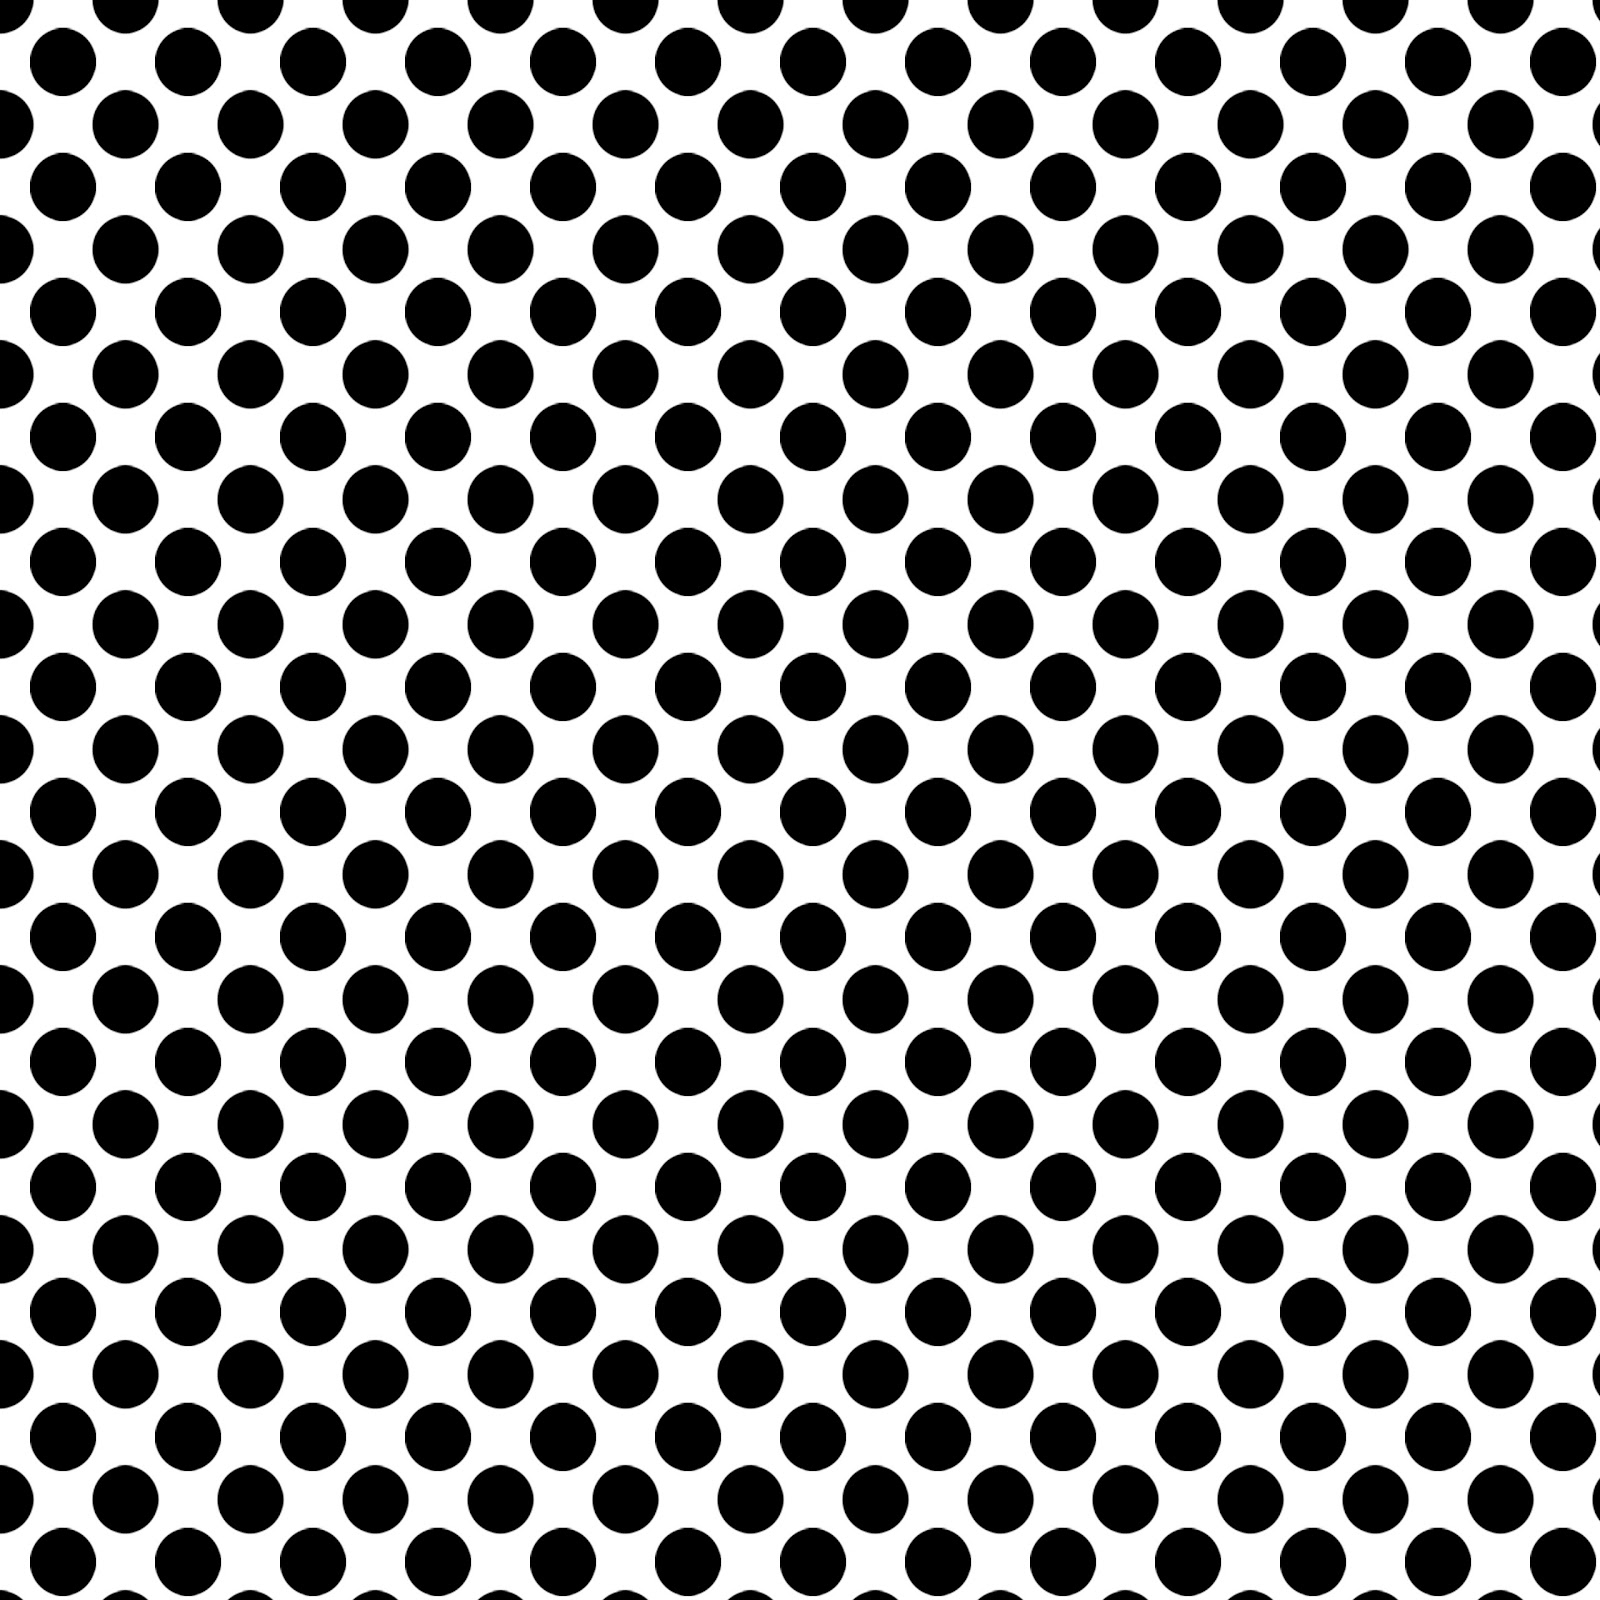  STaMPS Digital Scrapbook Paper   White w Black Polka Dots 1600x1600